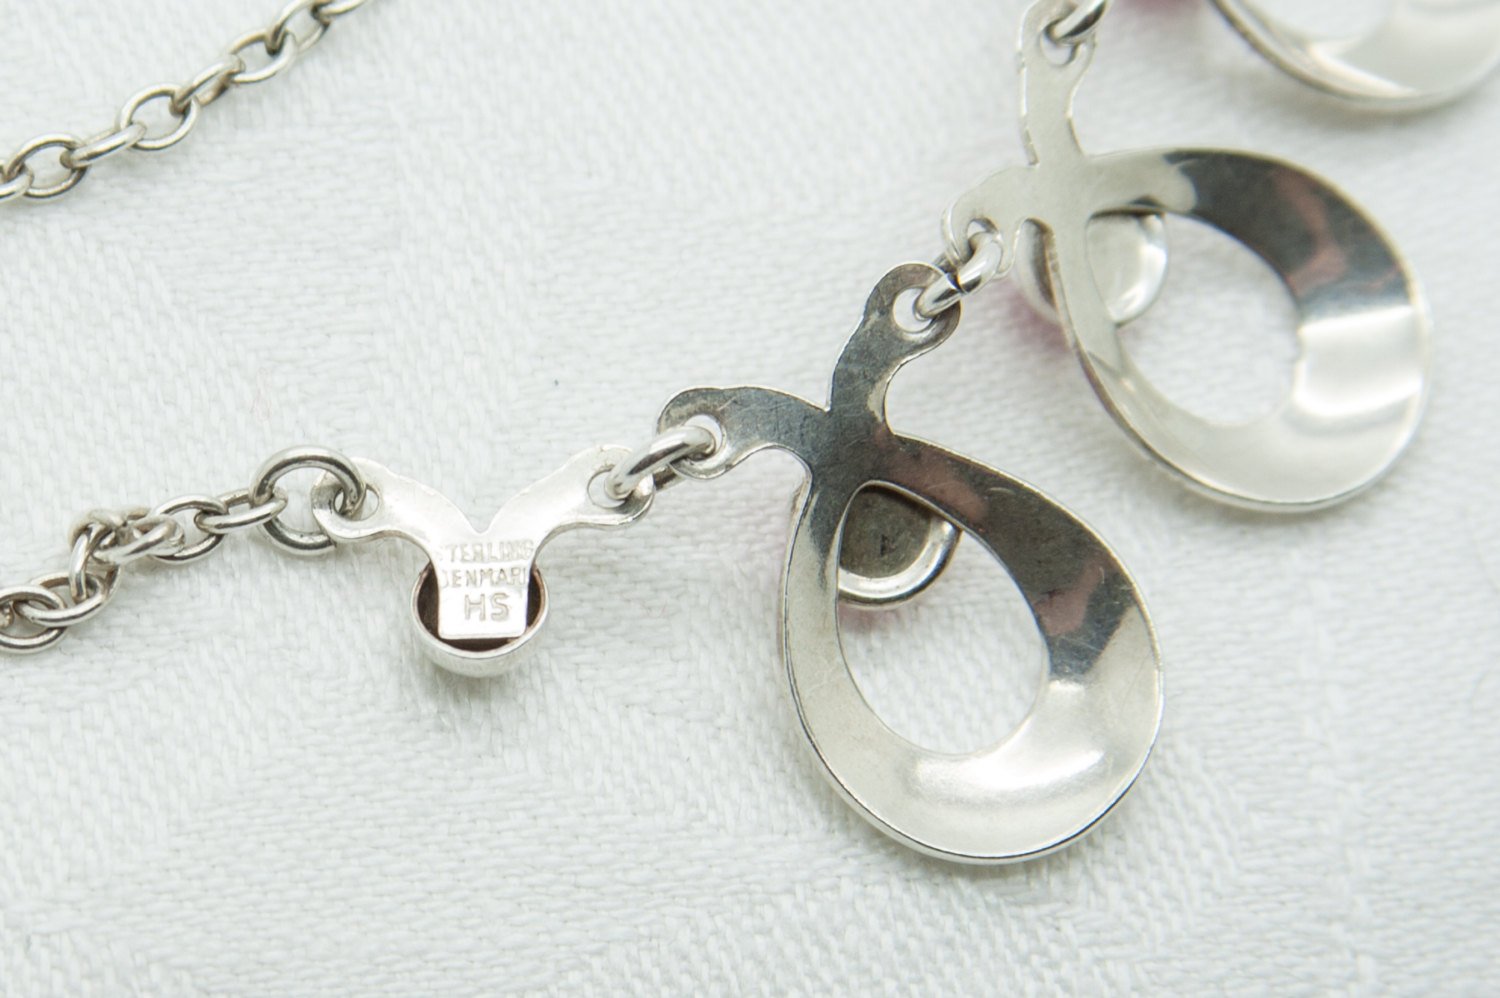 HERMANN SIERSBØL Modernist Pink Cabochon Solid Sterling Silver Necklace (925S) Mollaris.com 